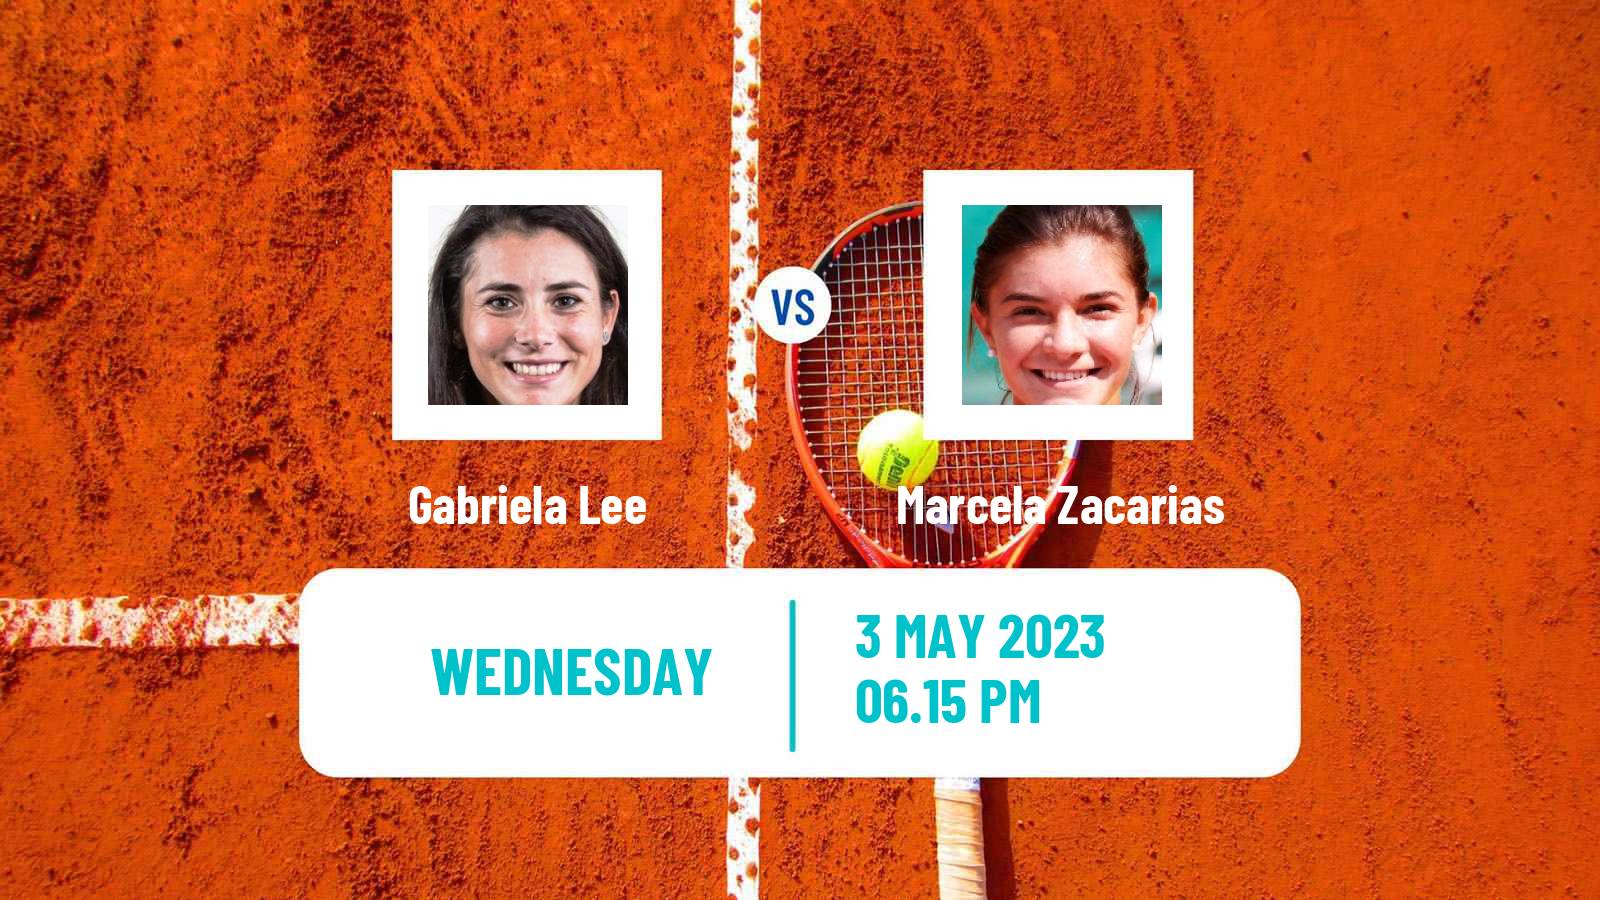 Tennis ITF Tournaments Gabriela Lee - Marcela Zacarias